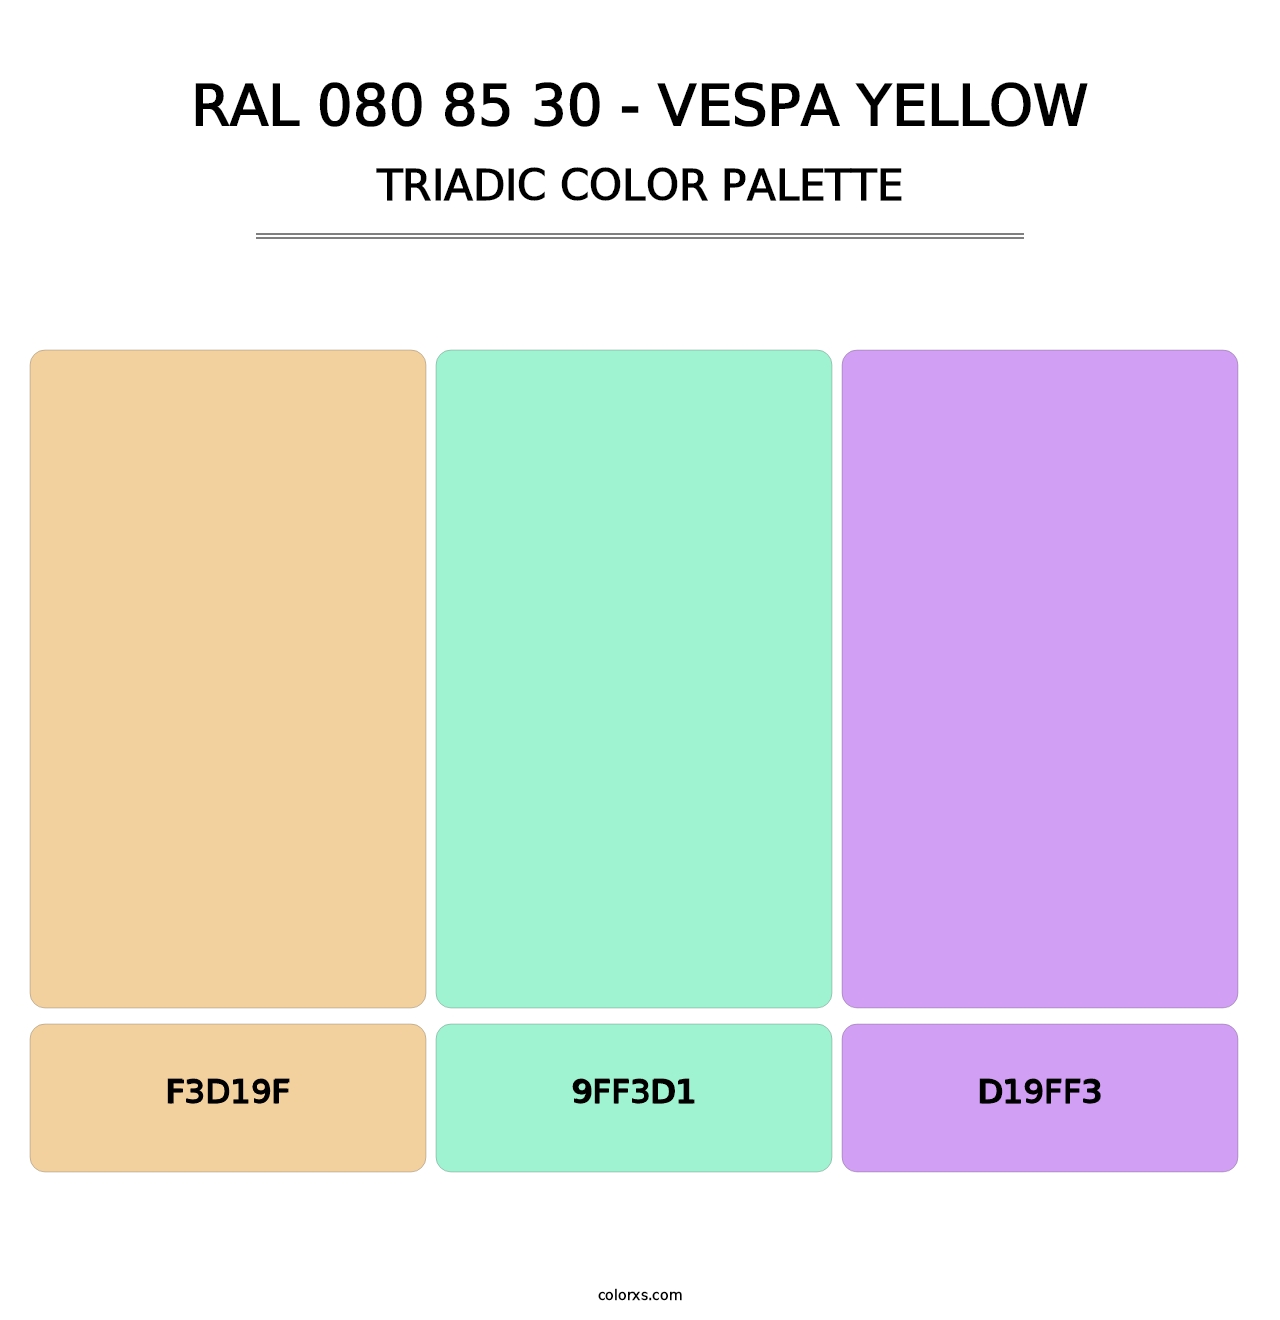 RAL 080 85 30 - Vespa Yellow - Triadic Color Palette